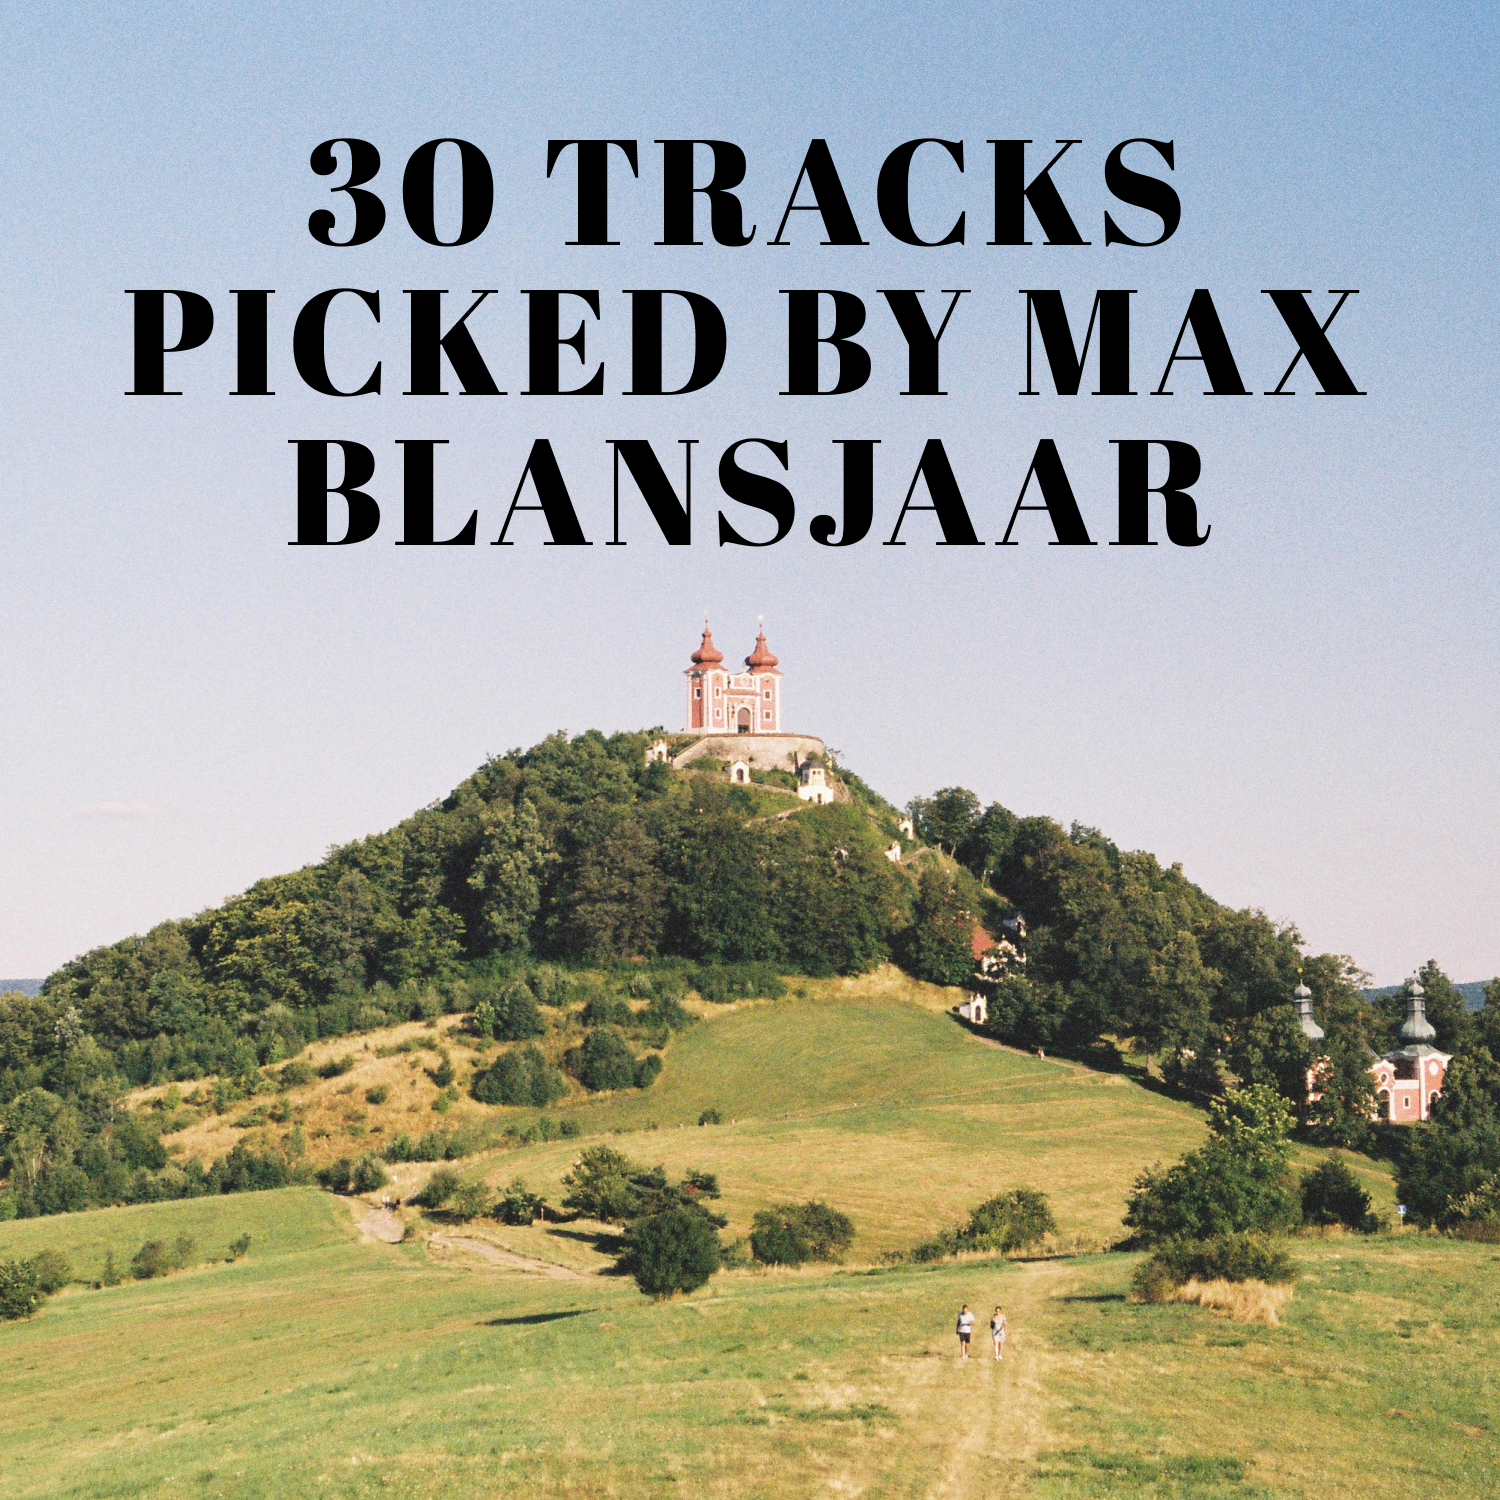 30 TRACKS PICKED BY MAX BLANSJAAR